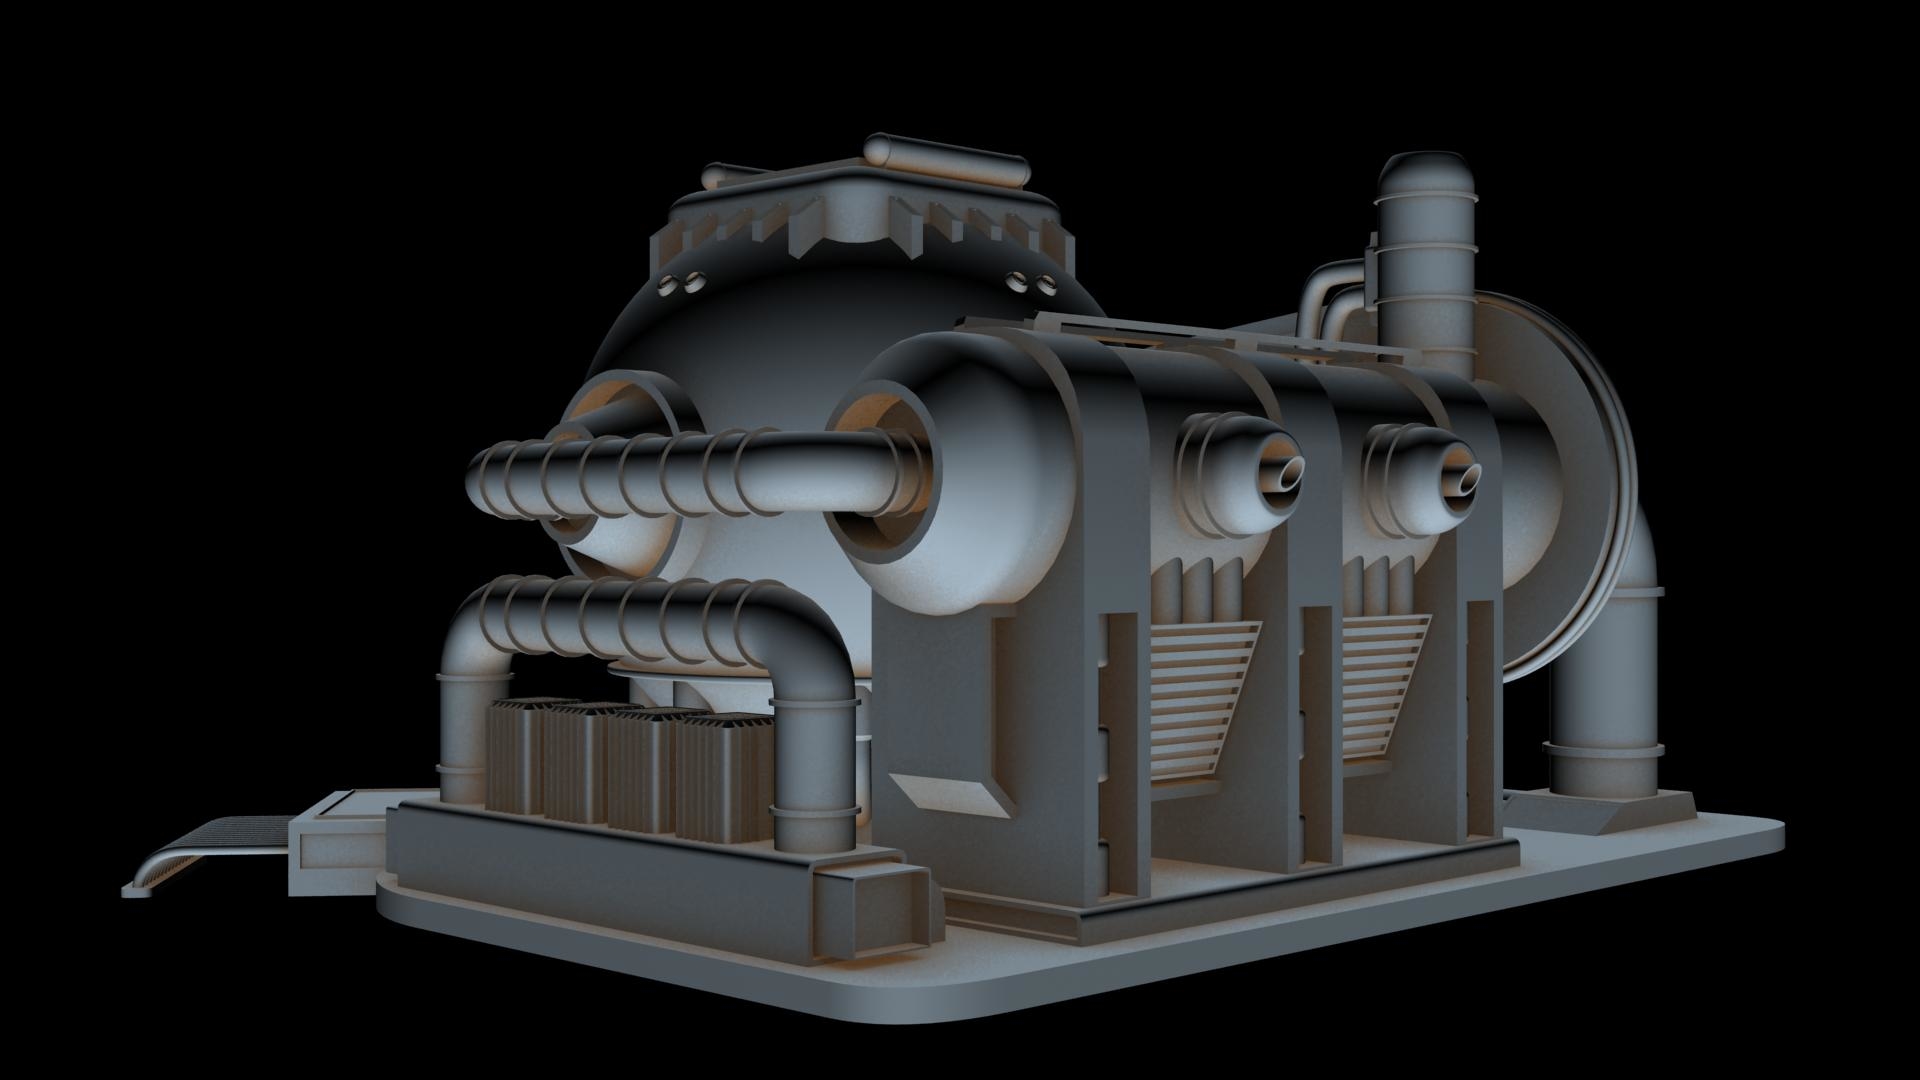 Power plant 3. 3д модель электростанции. Электростанция 3d модель. Power Station 3d model. Макет электростанции своими руками.